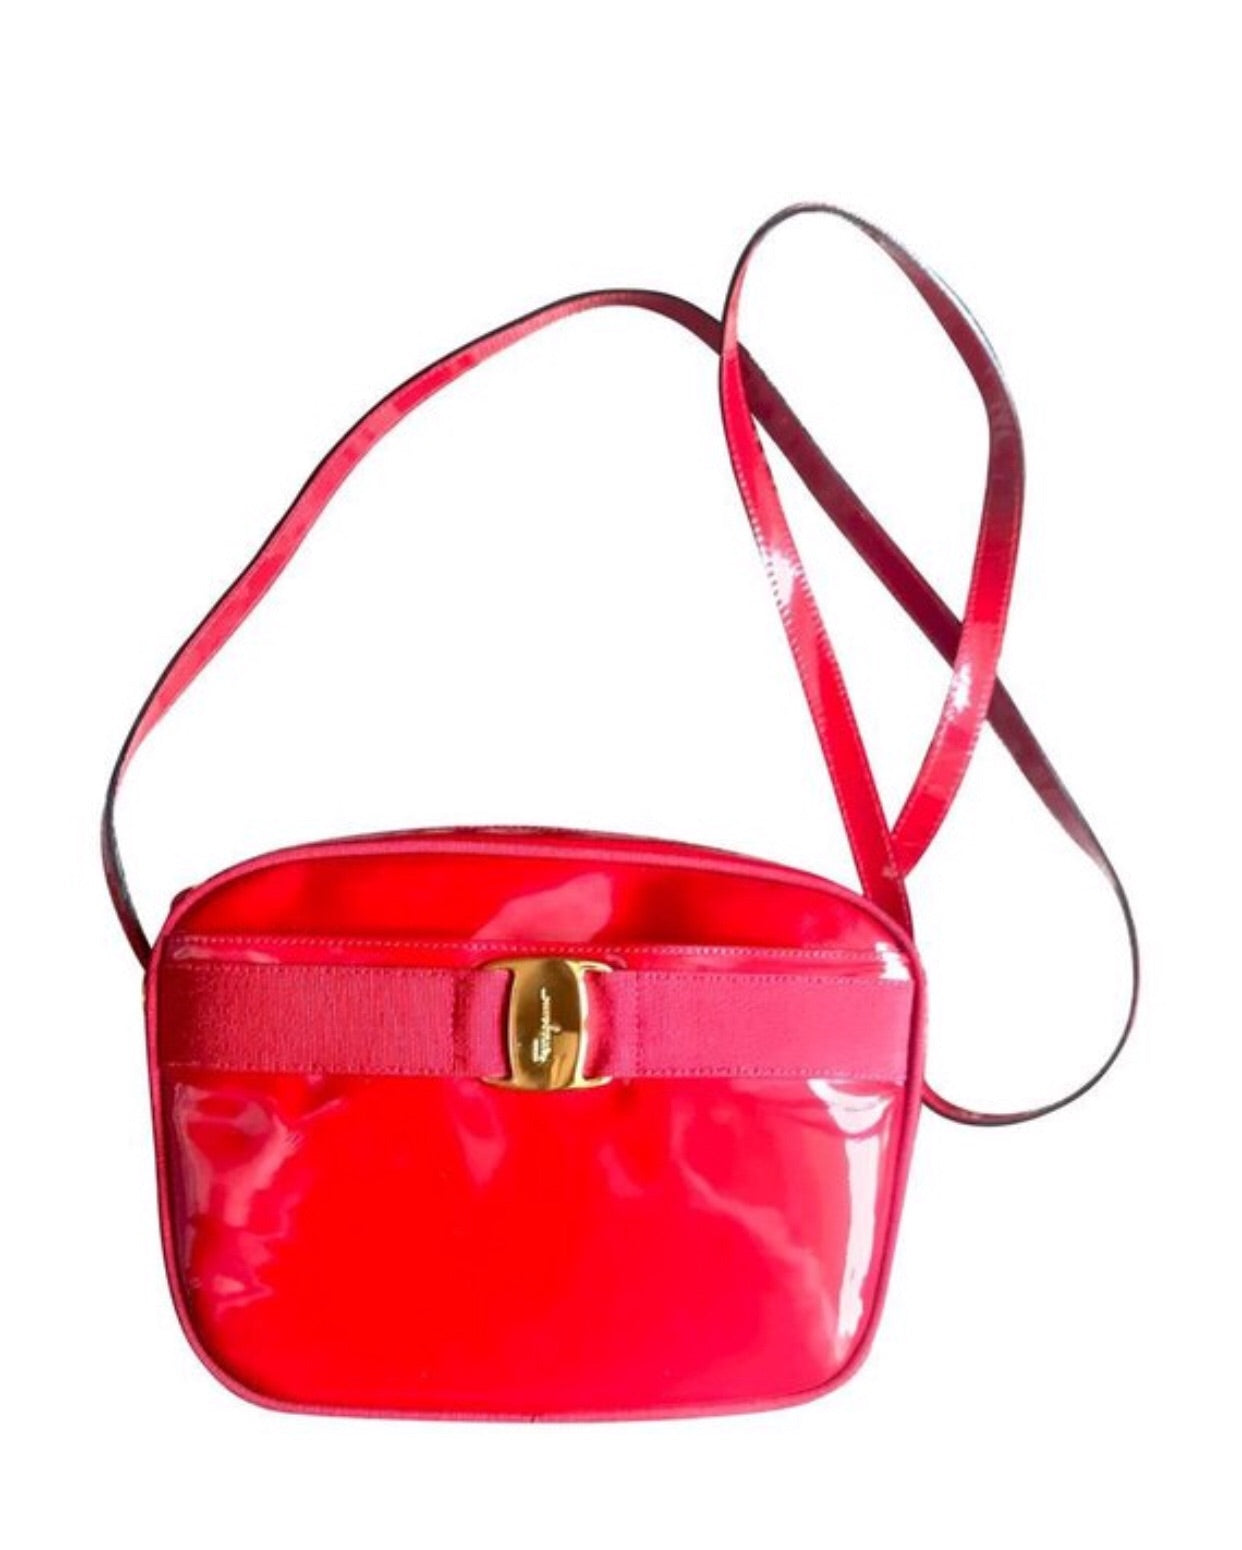 Salvatore Ferragamo Bow Shoulder Bags for Women for sale